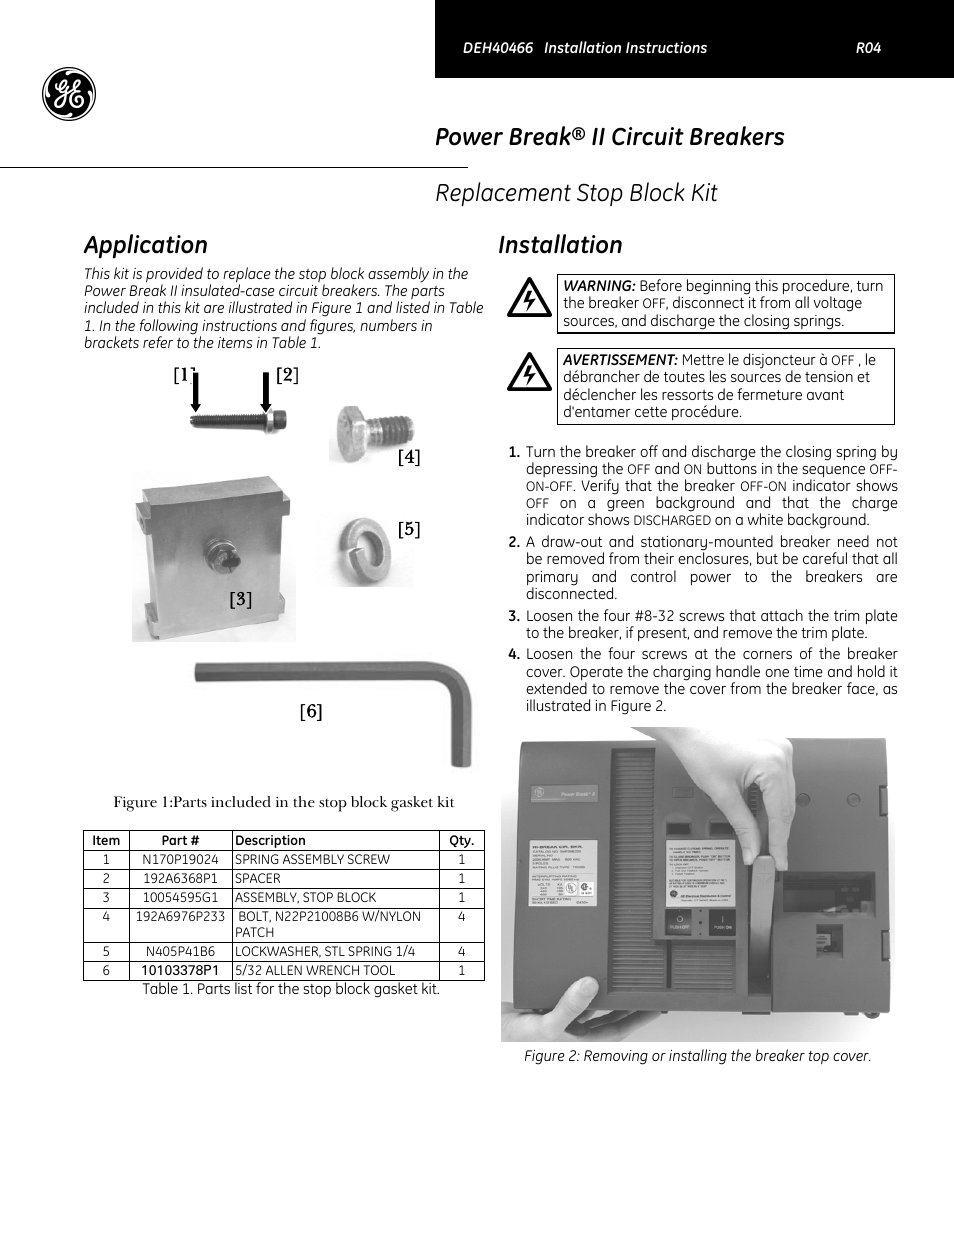 Power Break II Replacment Stop Block Kit